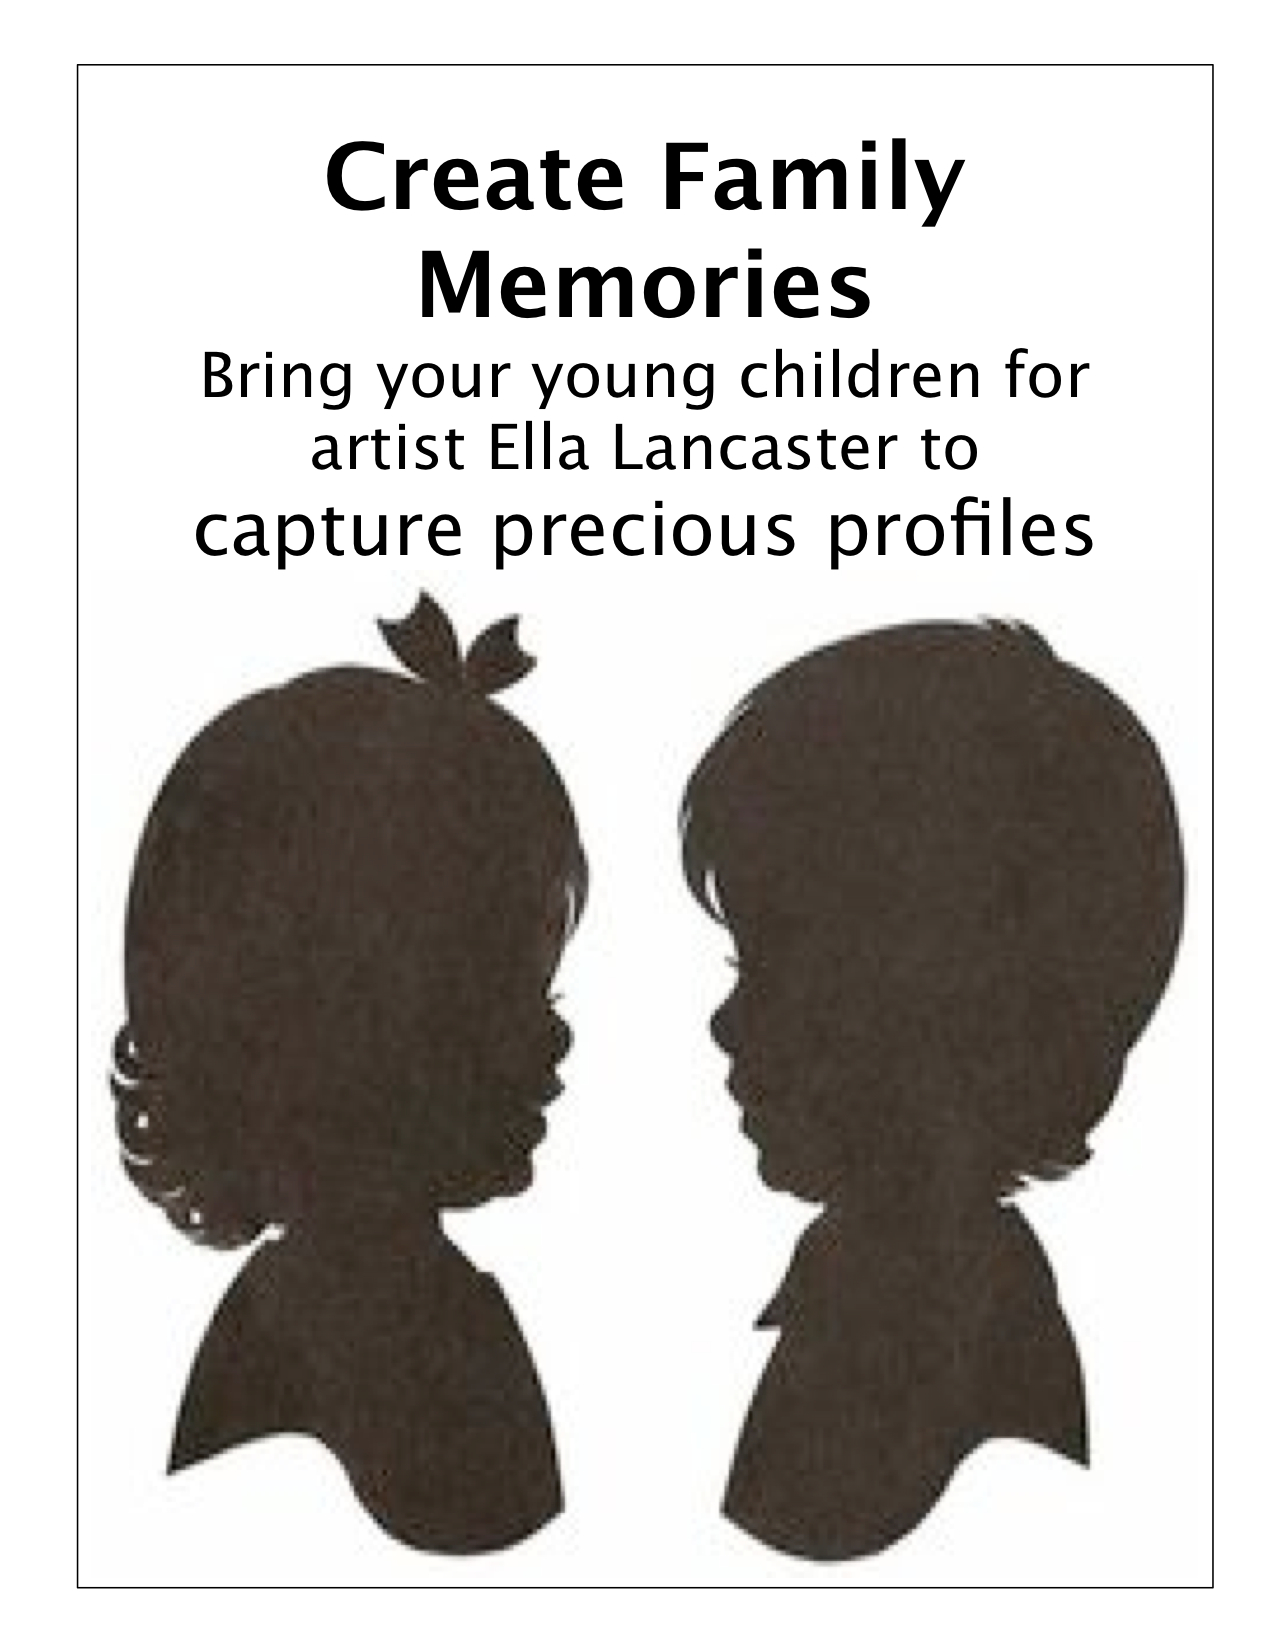 Create Family Memories Bring your young children for silhouette artist Ella Lancaster to capture precious profiles Saturday, December 19, 2015.